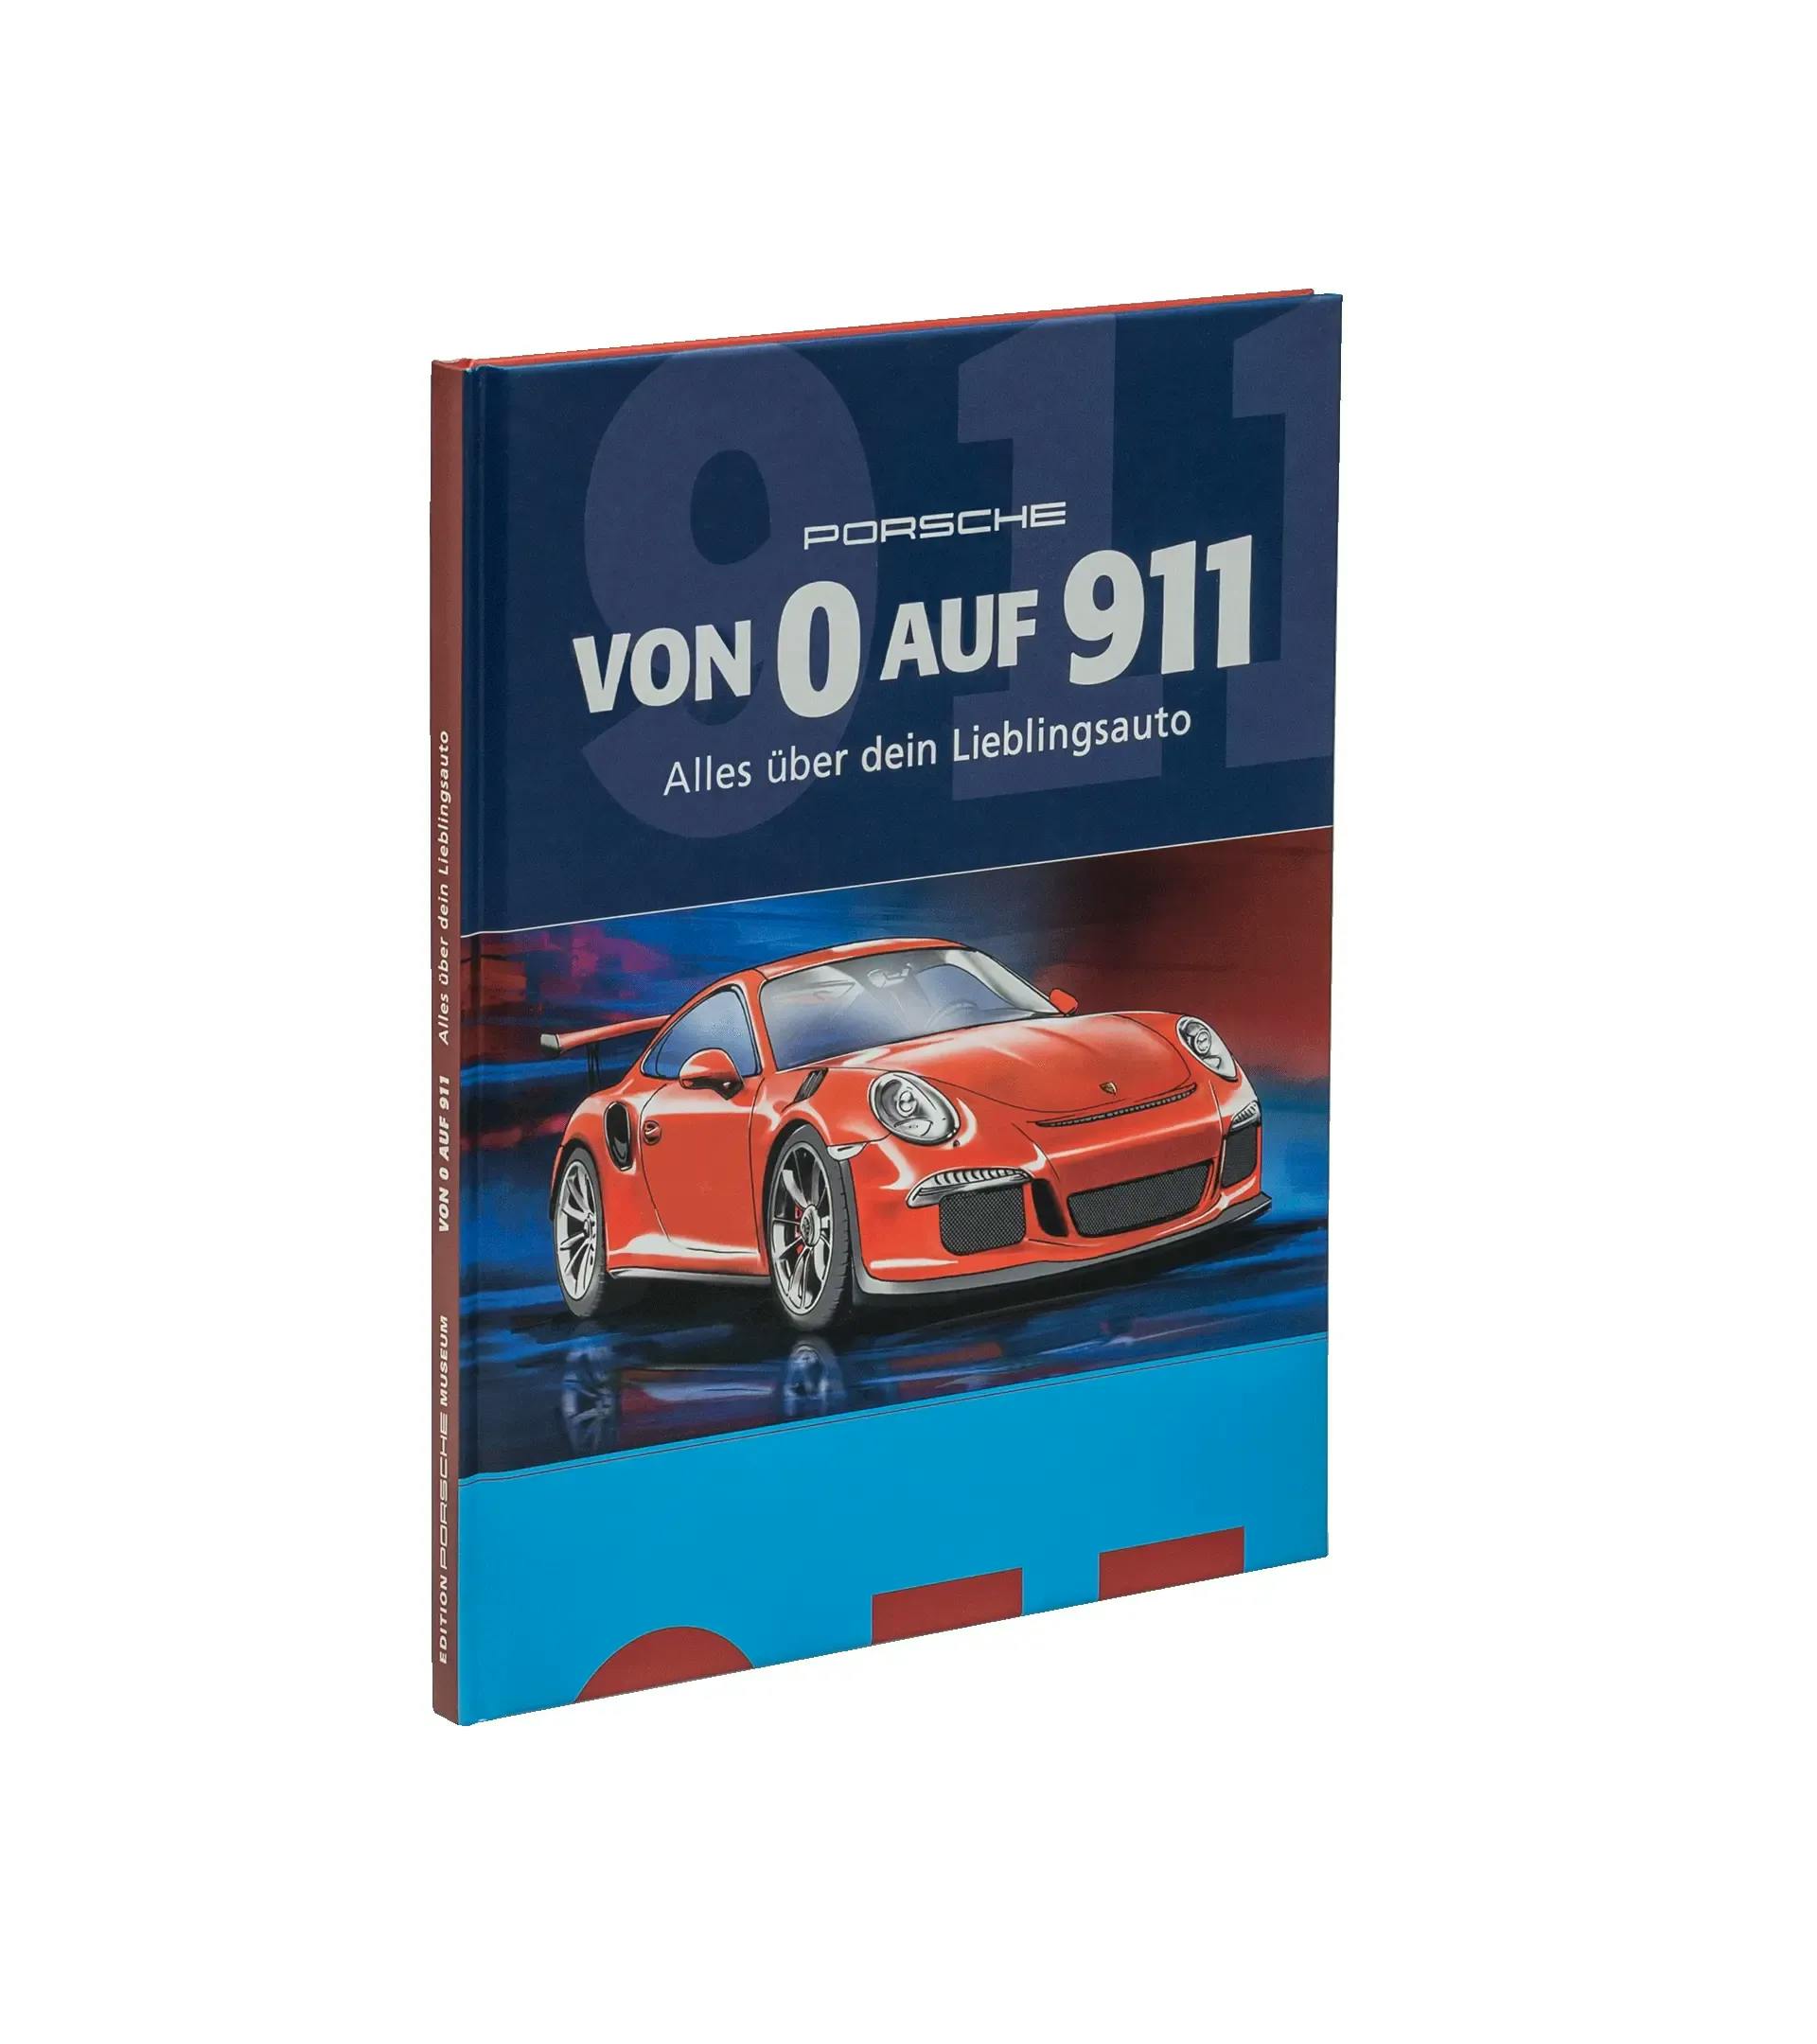 Porsche Book From 0 to 911